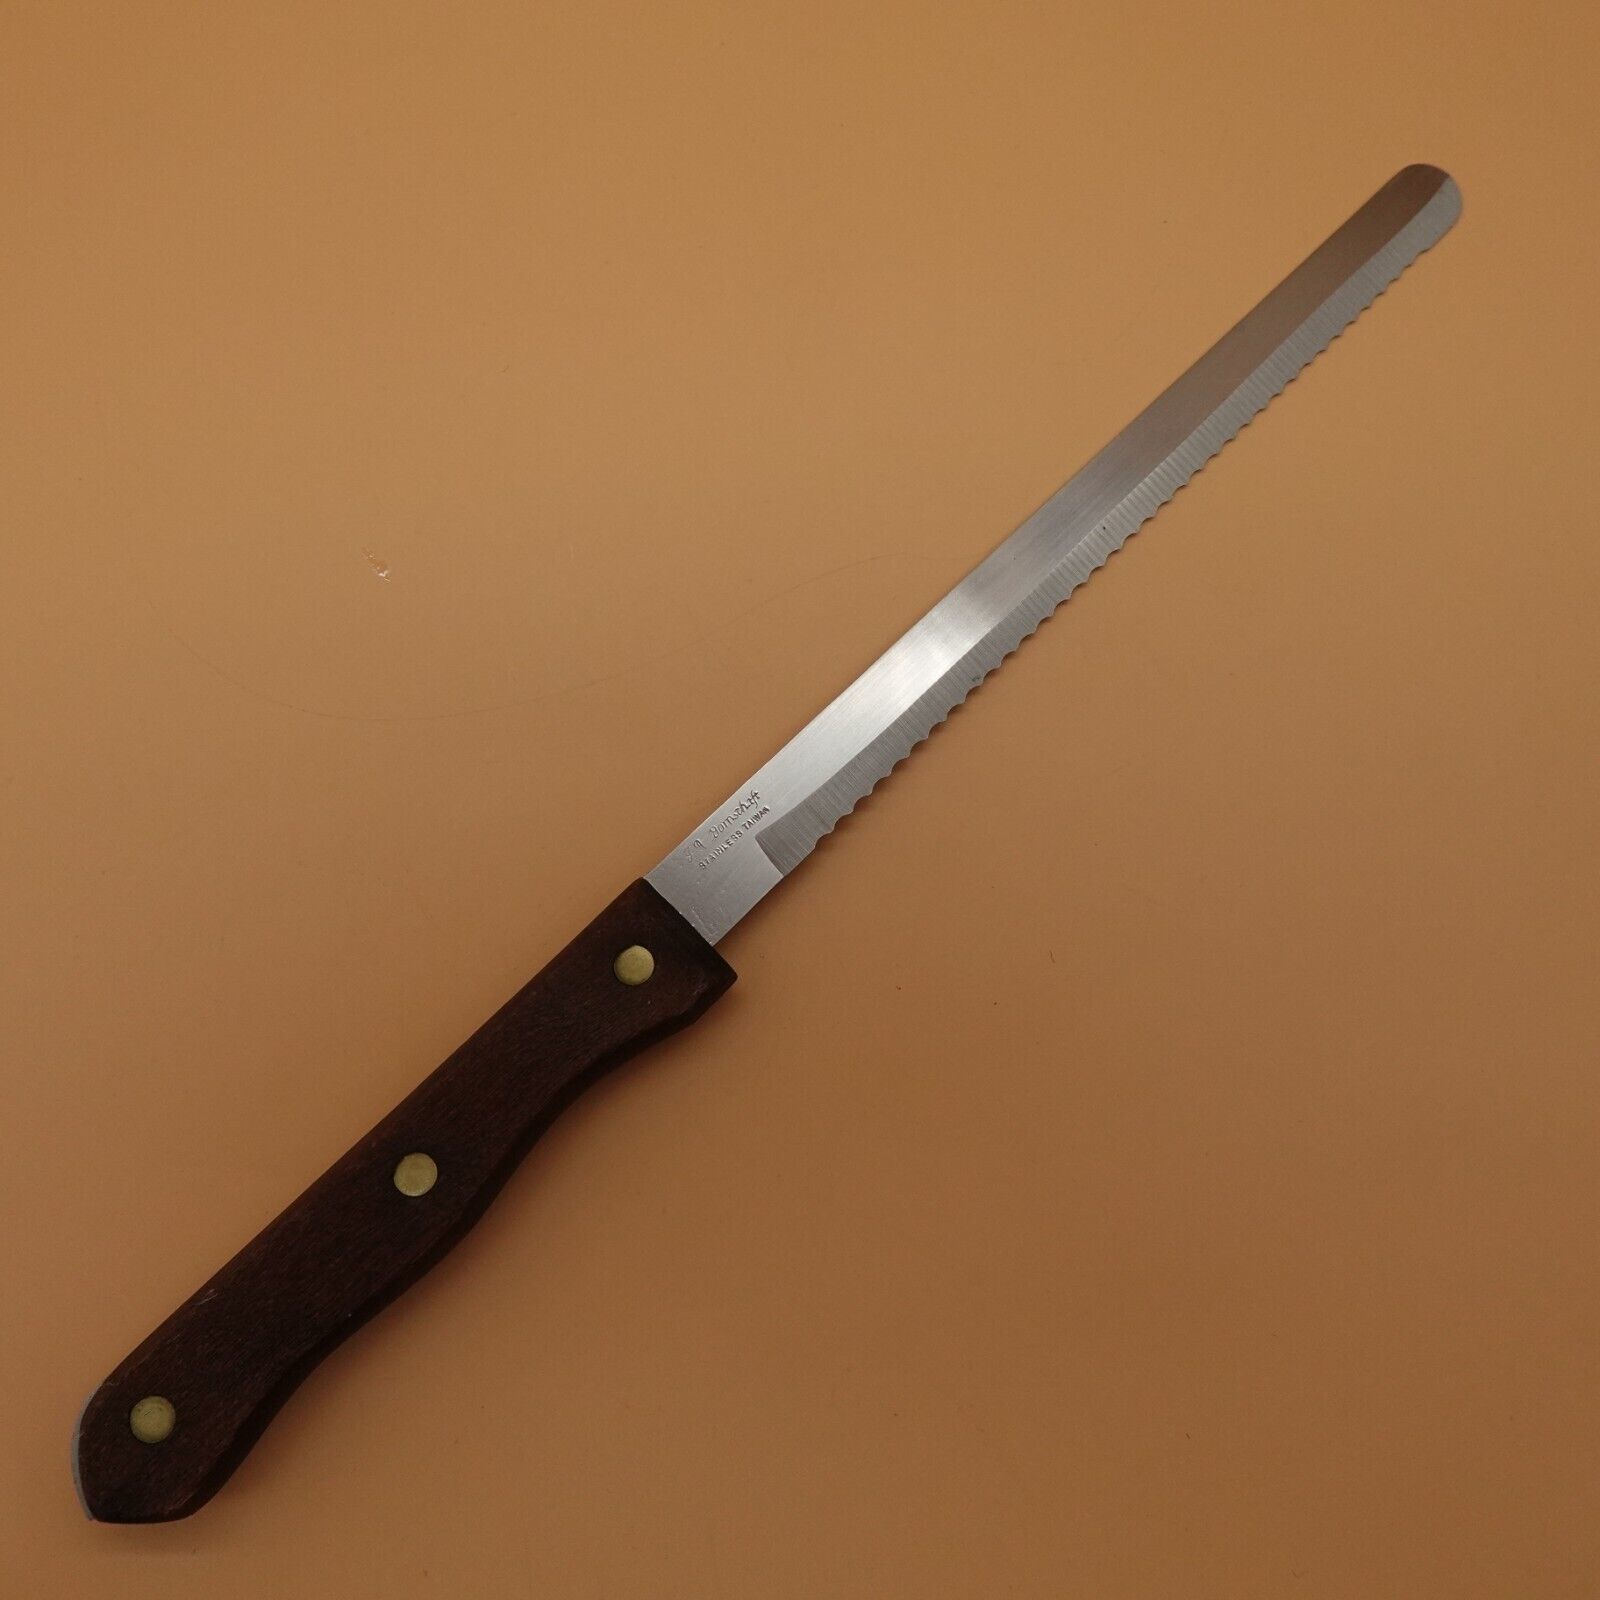 Primary image for J A Bomschaft Bread Knife Slicing 9 inch Serrated Blade Wood Handle Vintage